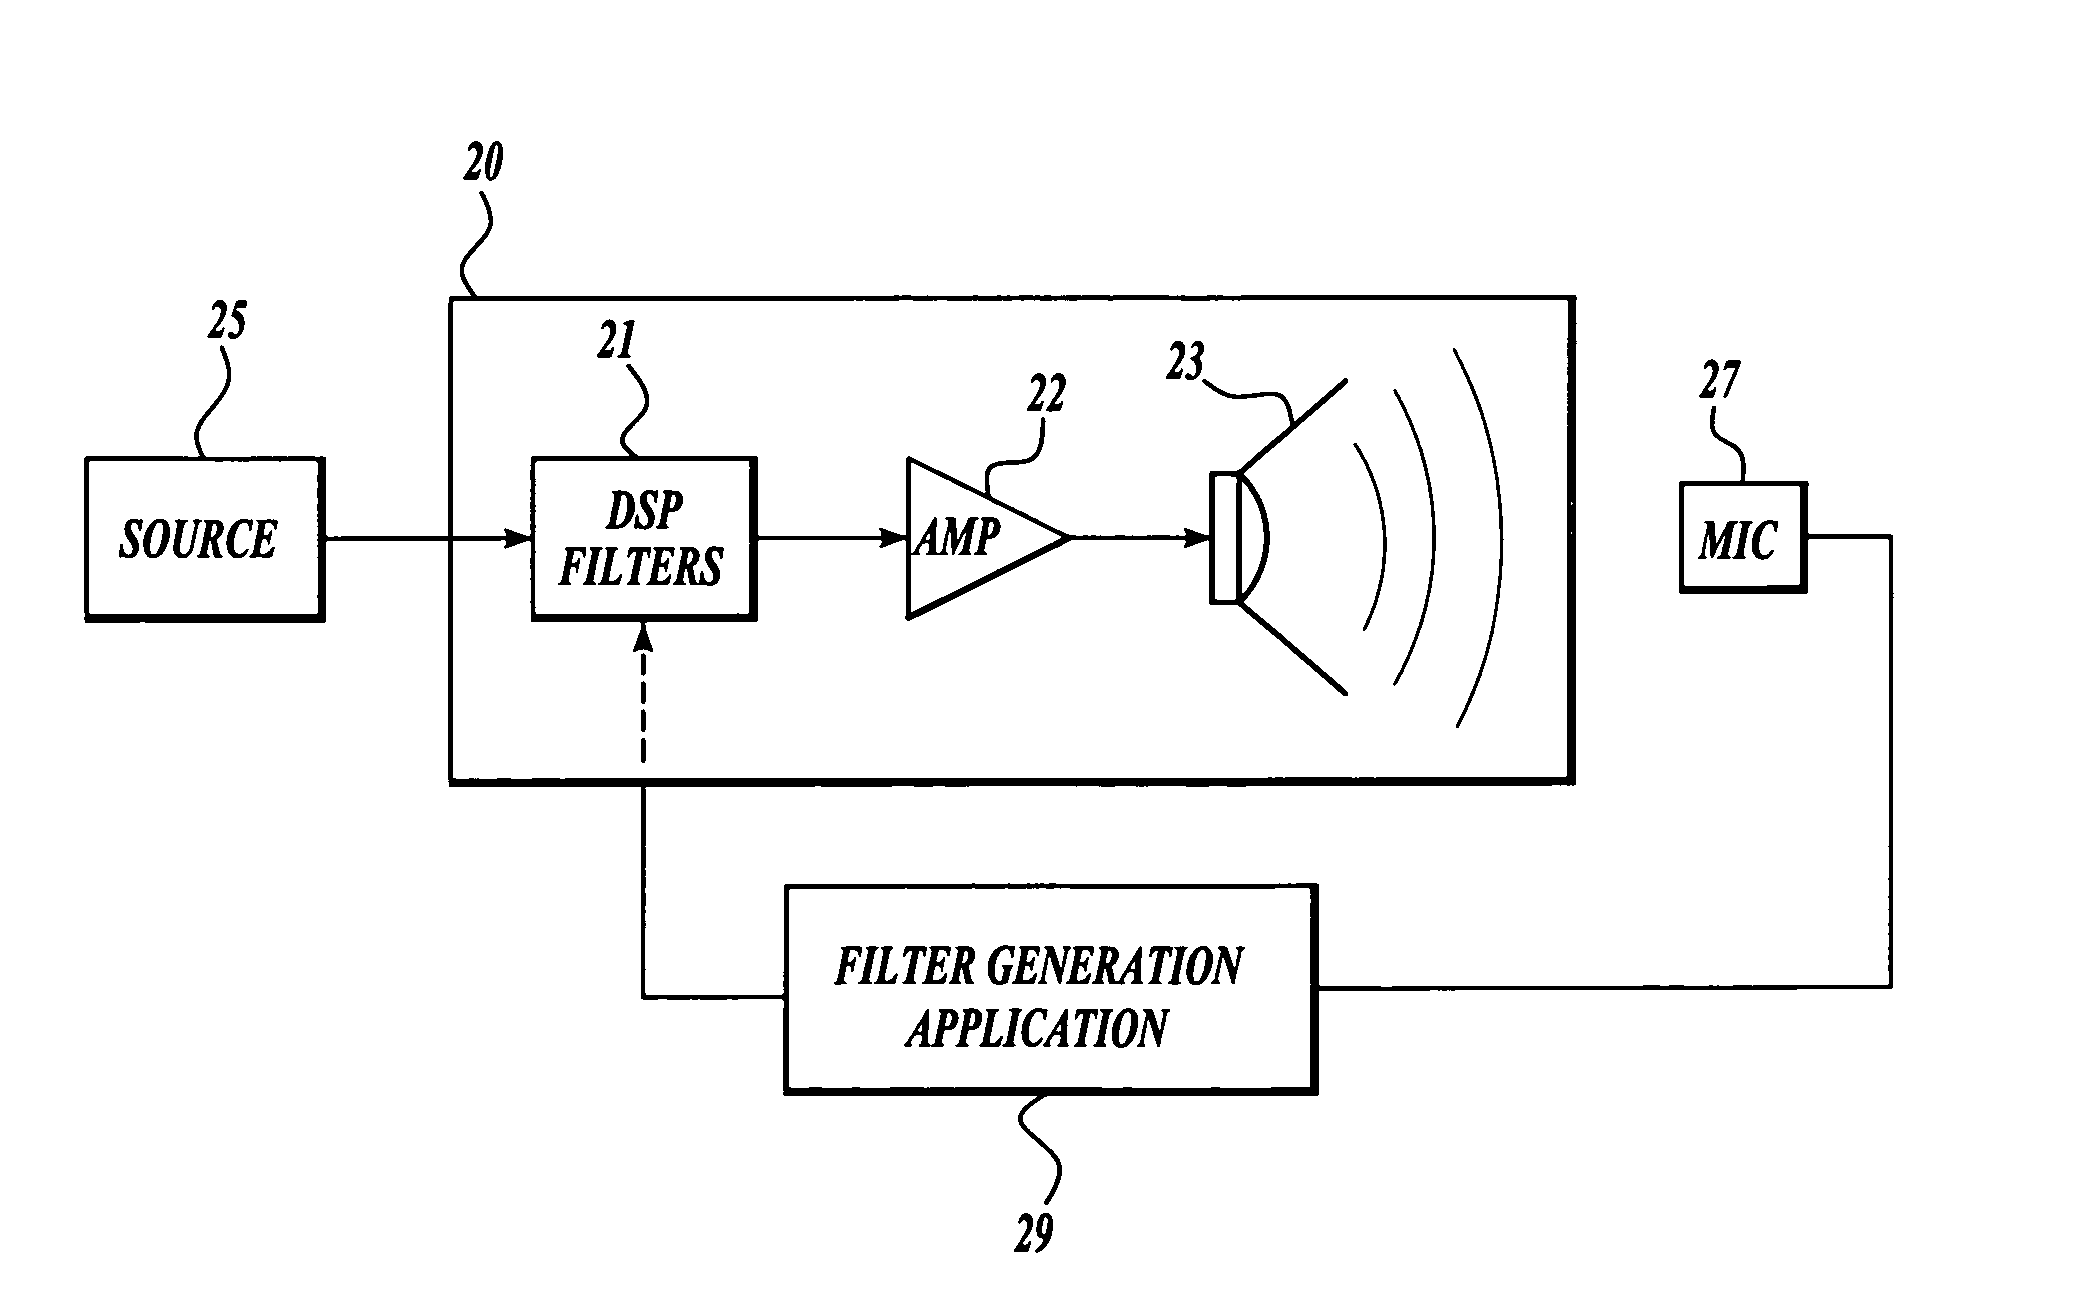 Creating digital signal processing (DSP) filters to improve loudspeaker transient response